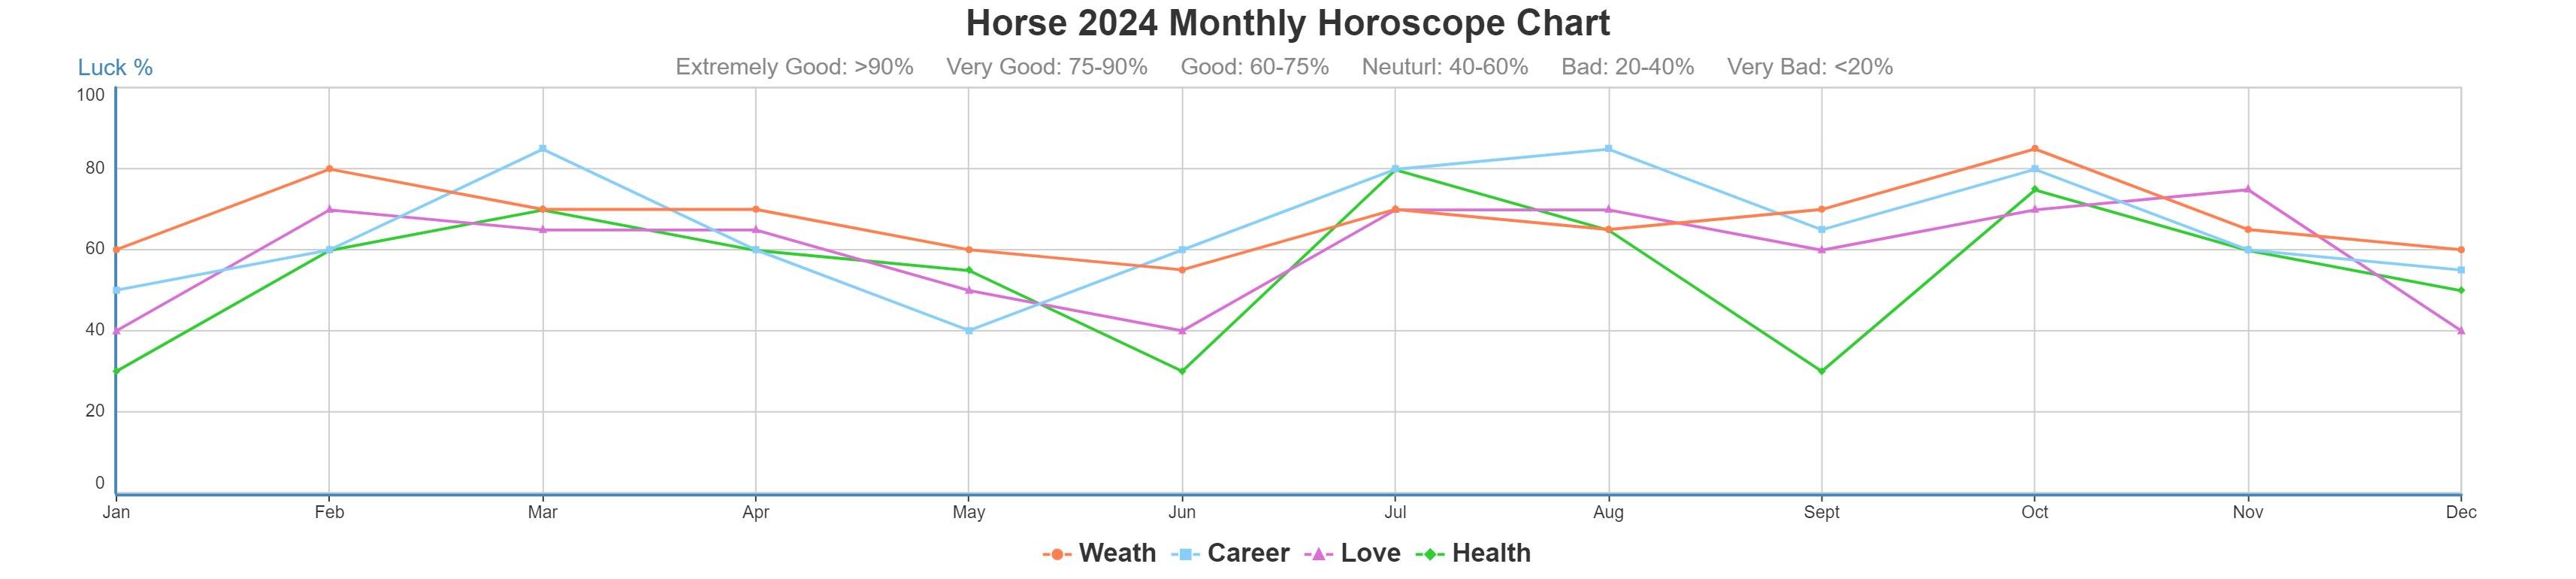 Horse 2024 monthly horoscope